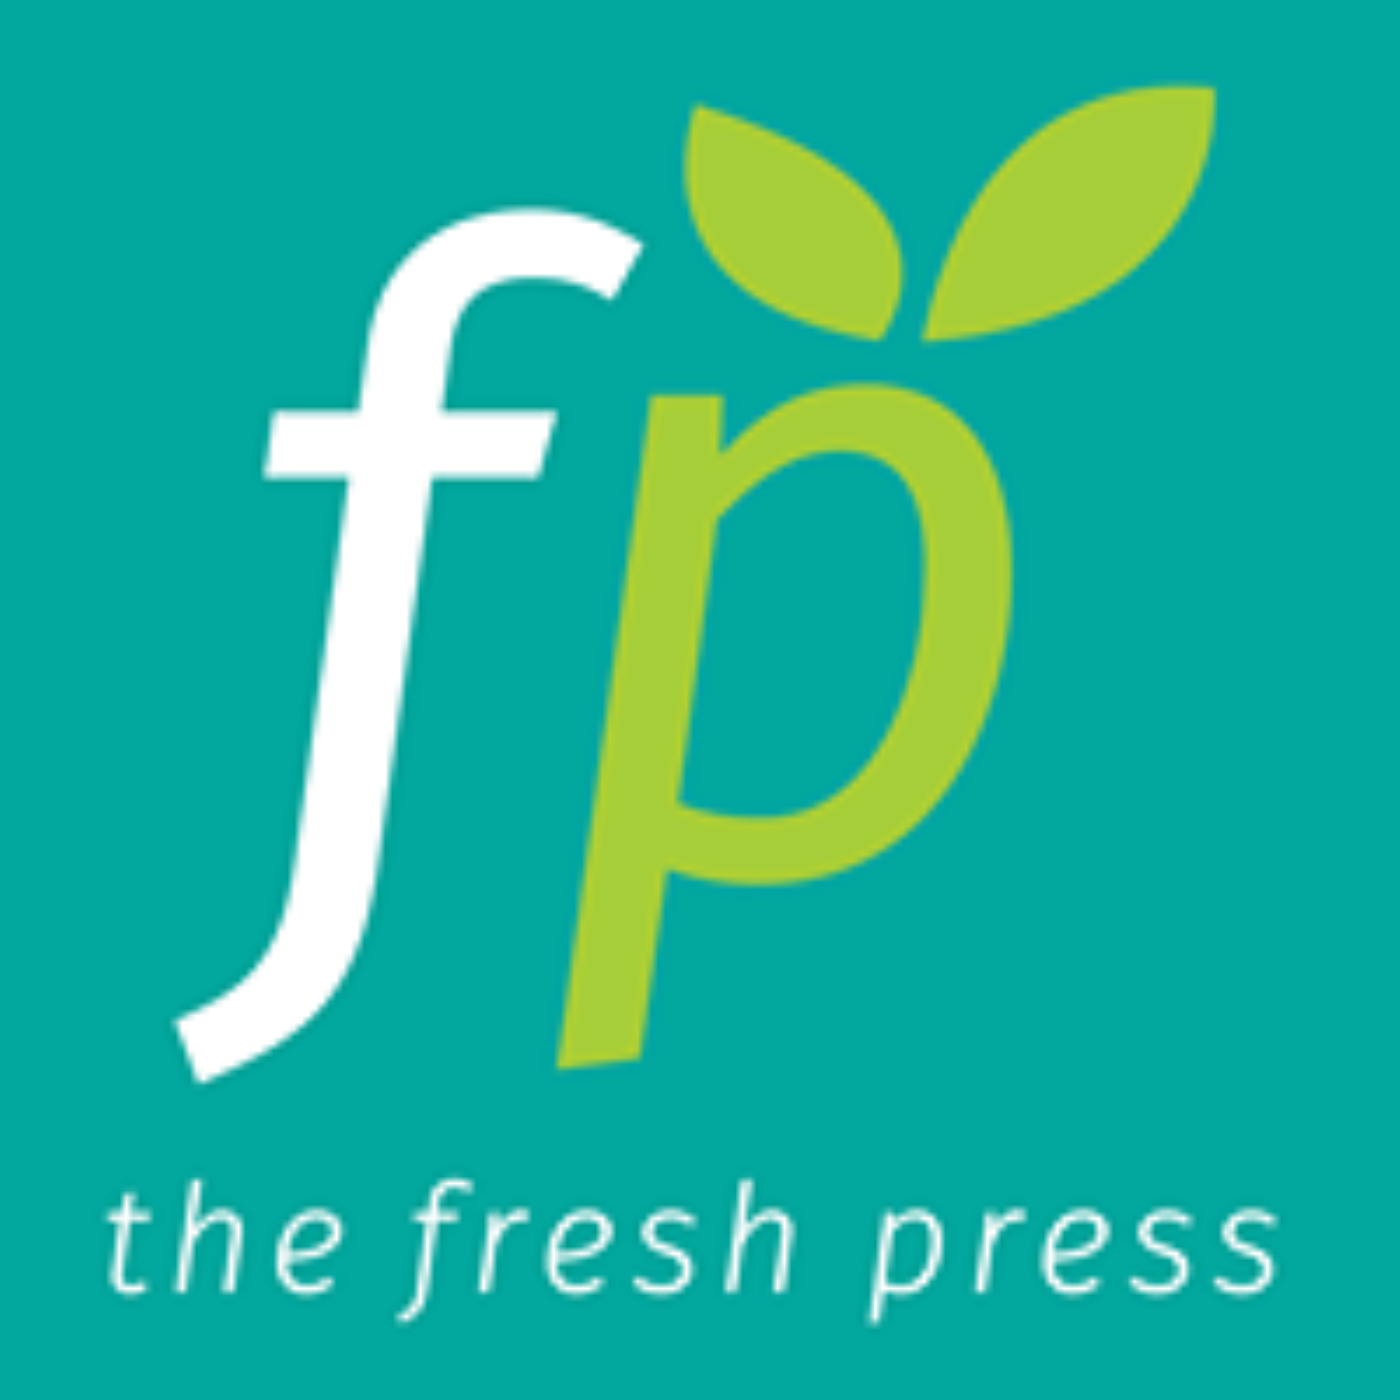 The Fresh Press